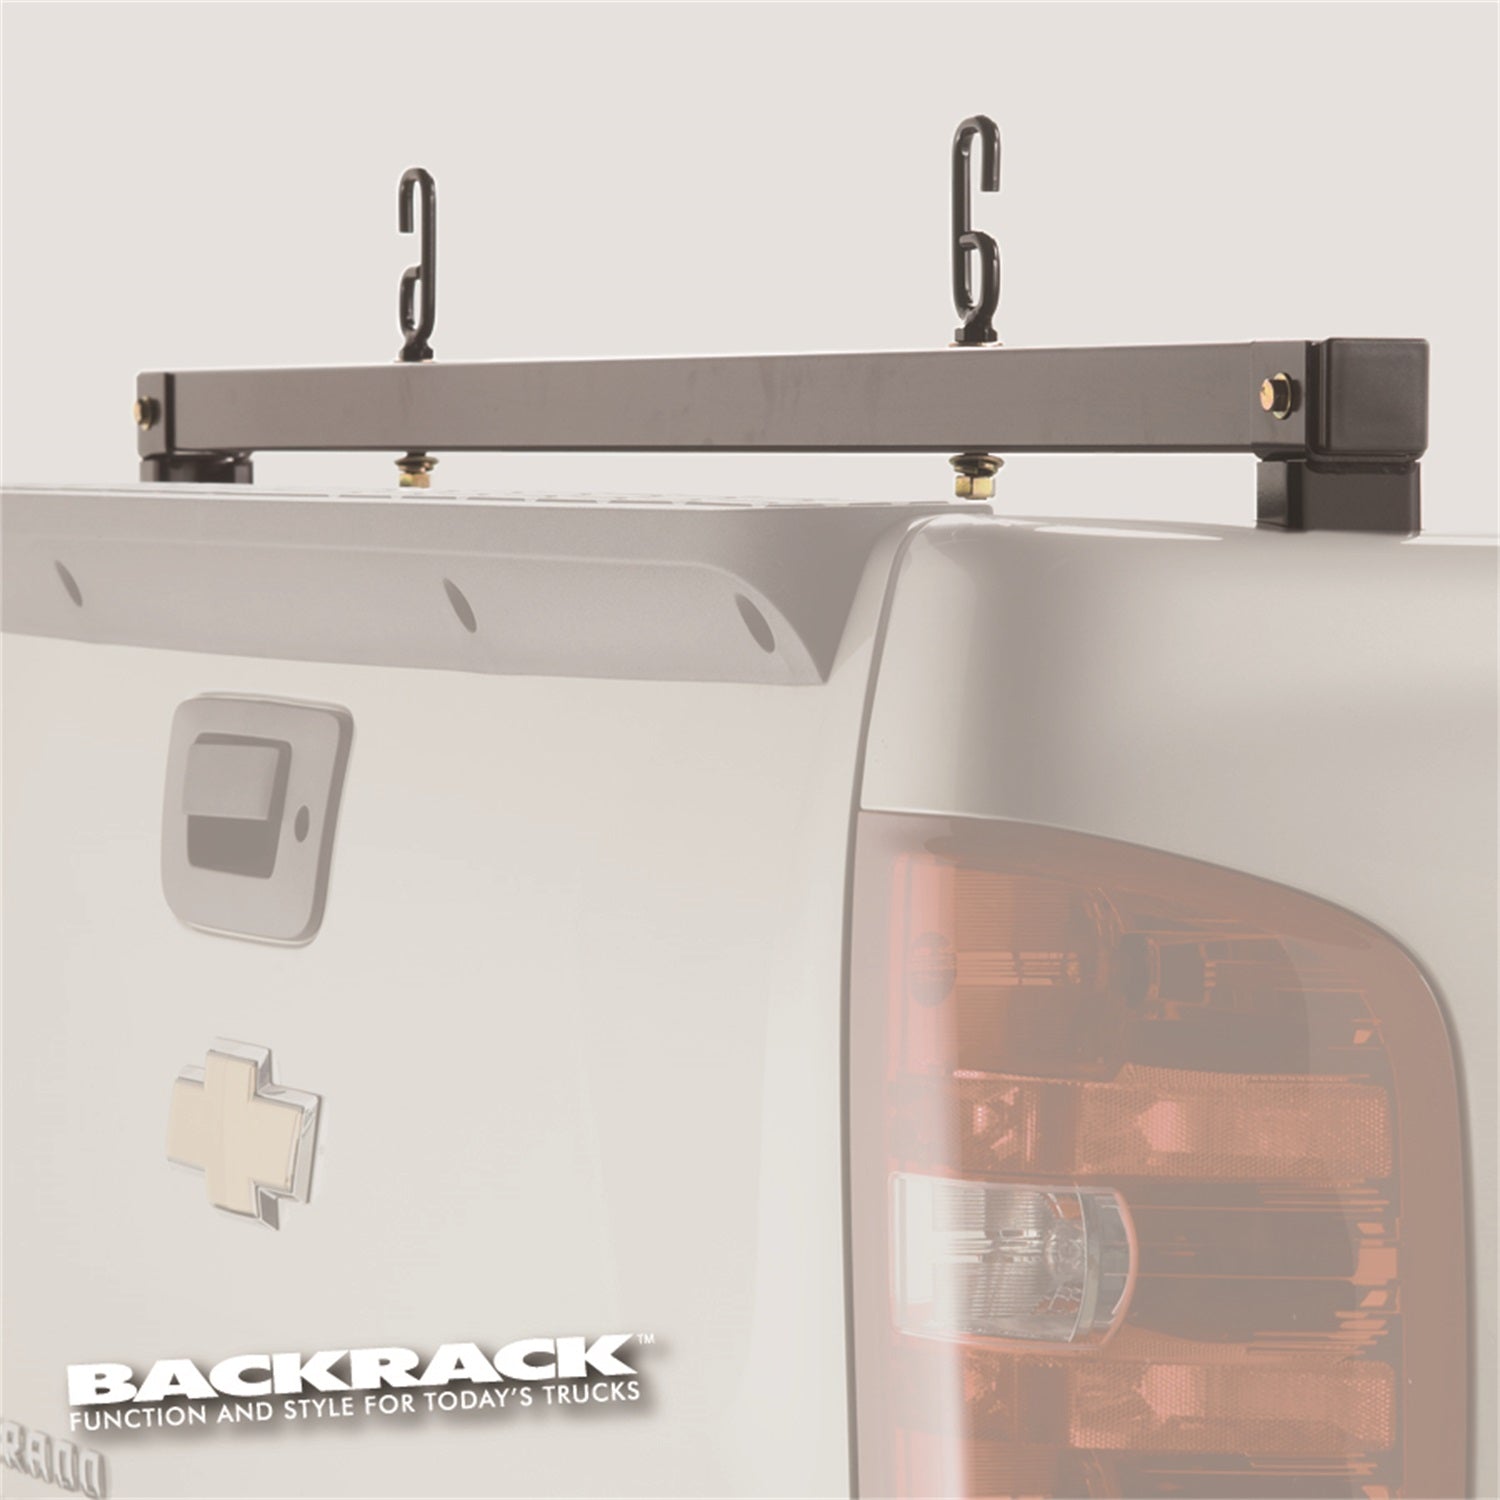 Backrack 11524 Truck Bed Rear Bar